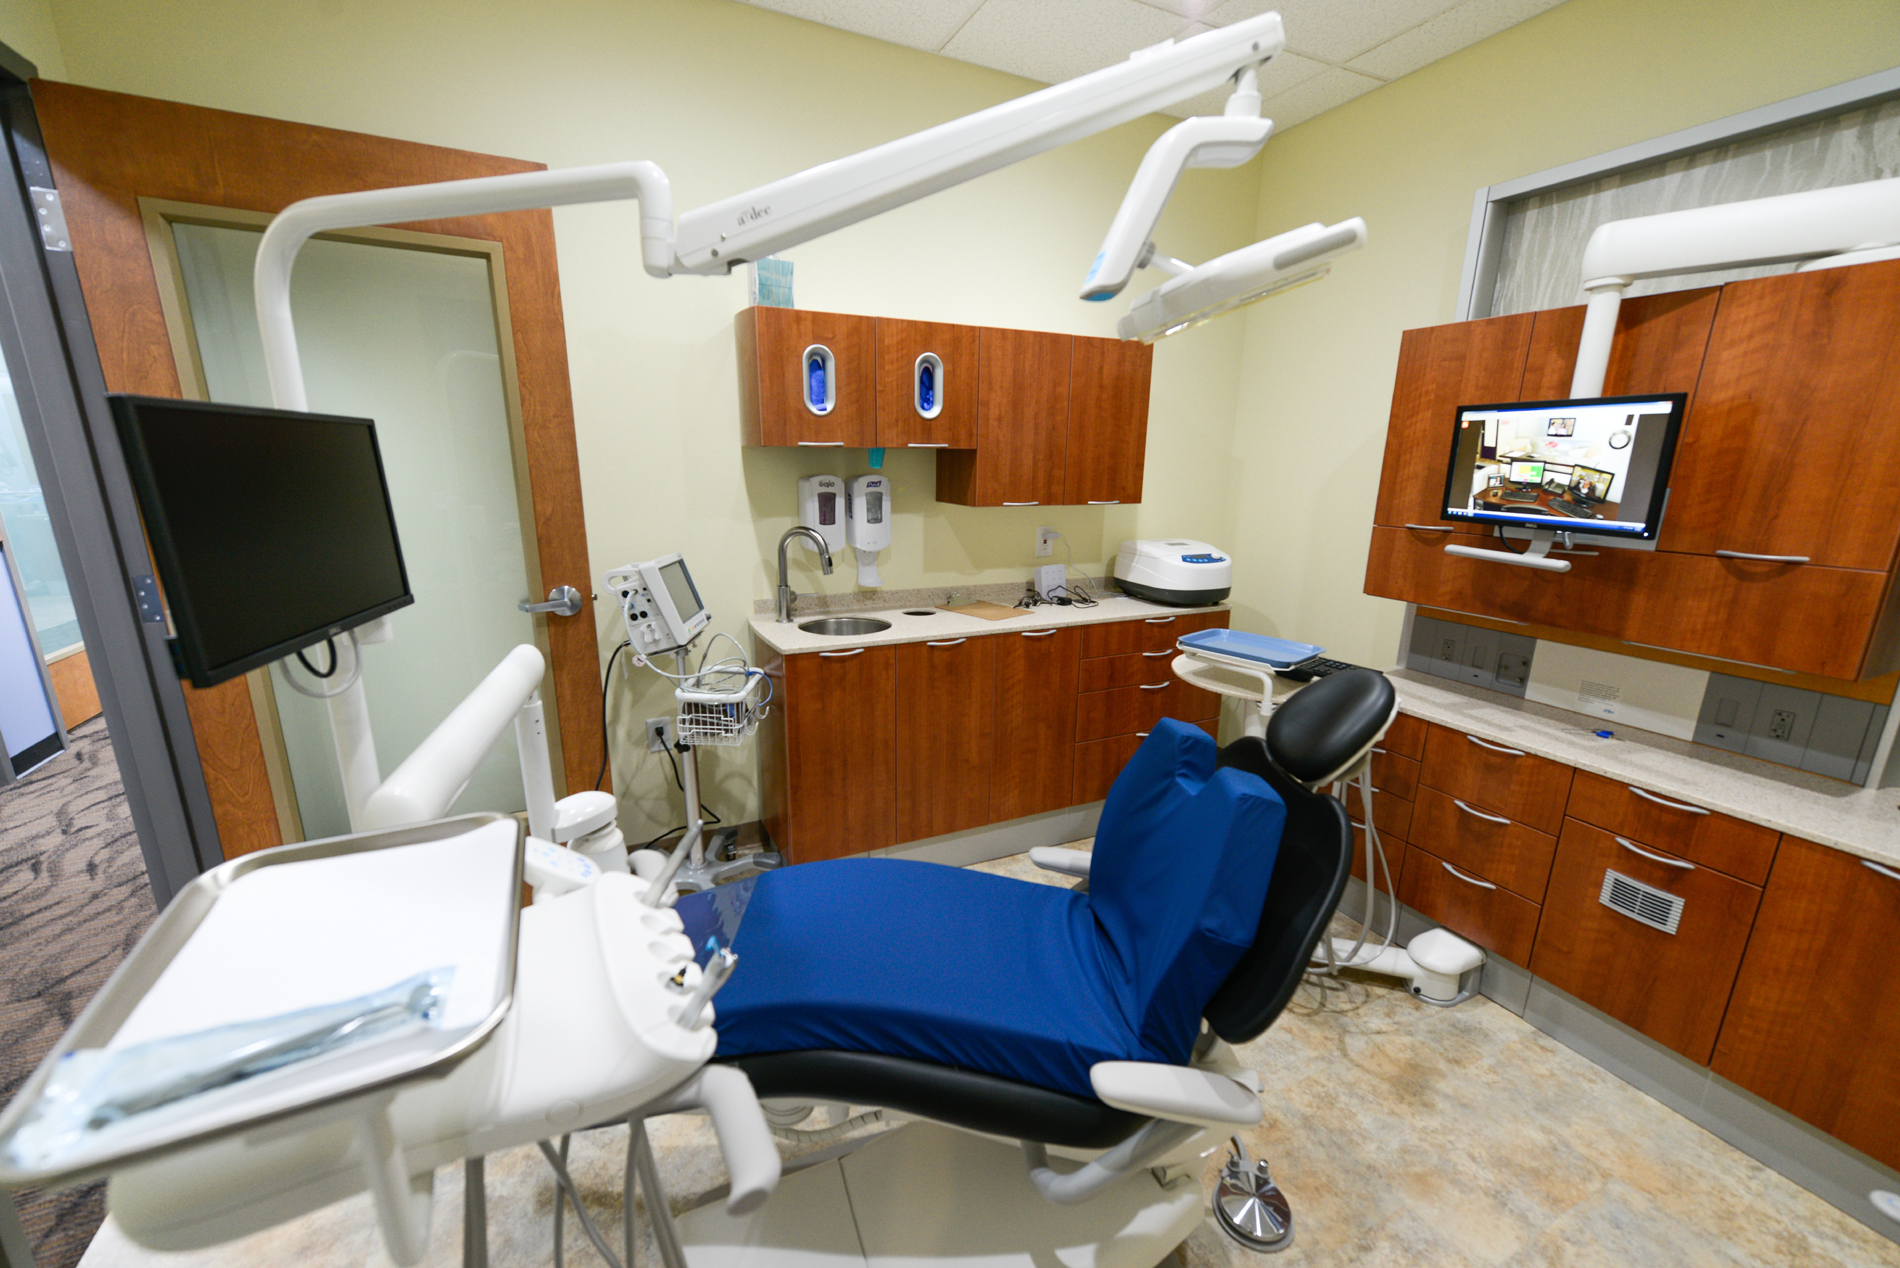 AffableCare Dental laboratory